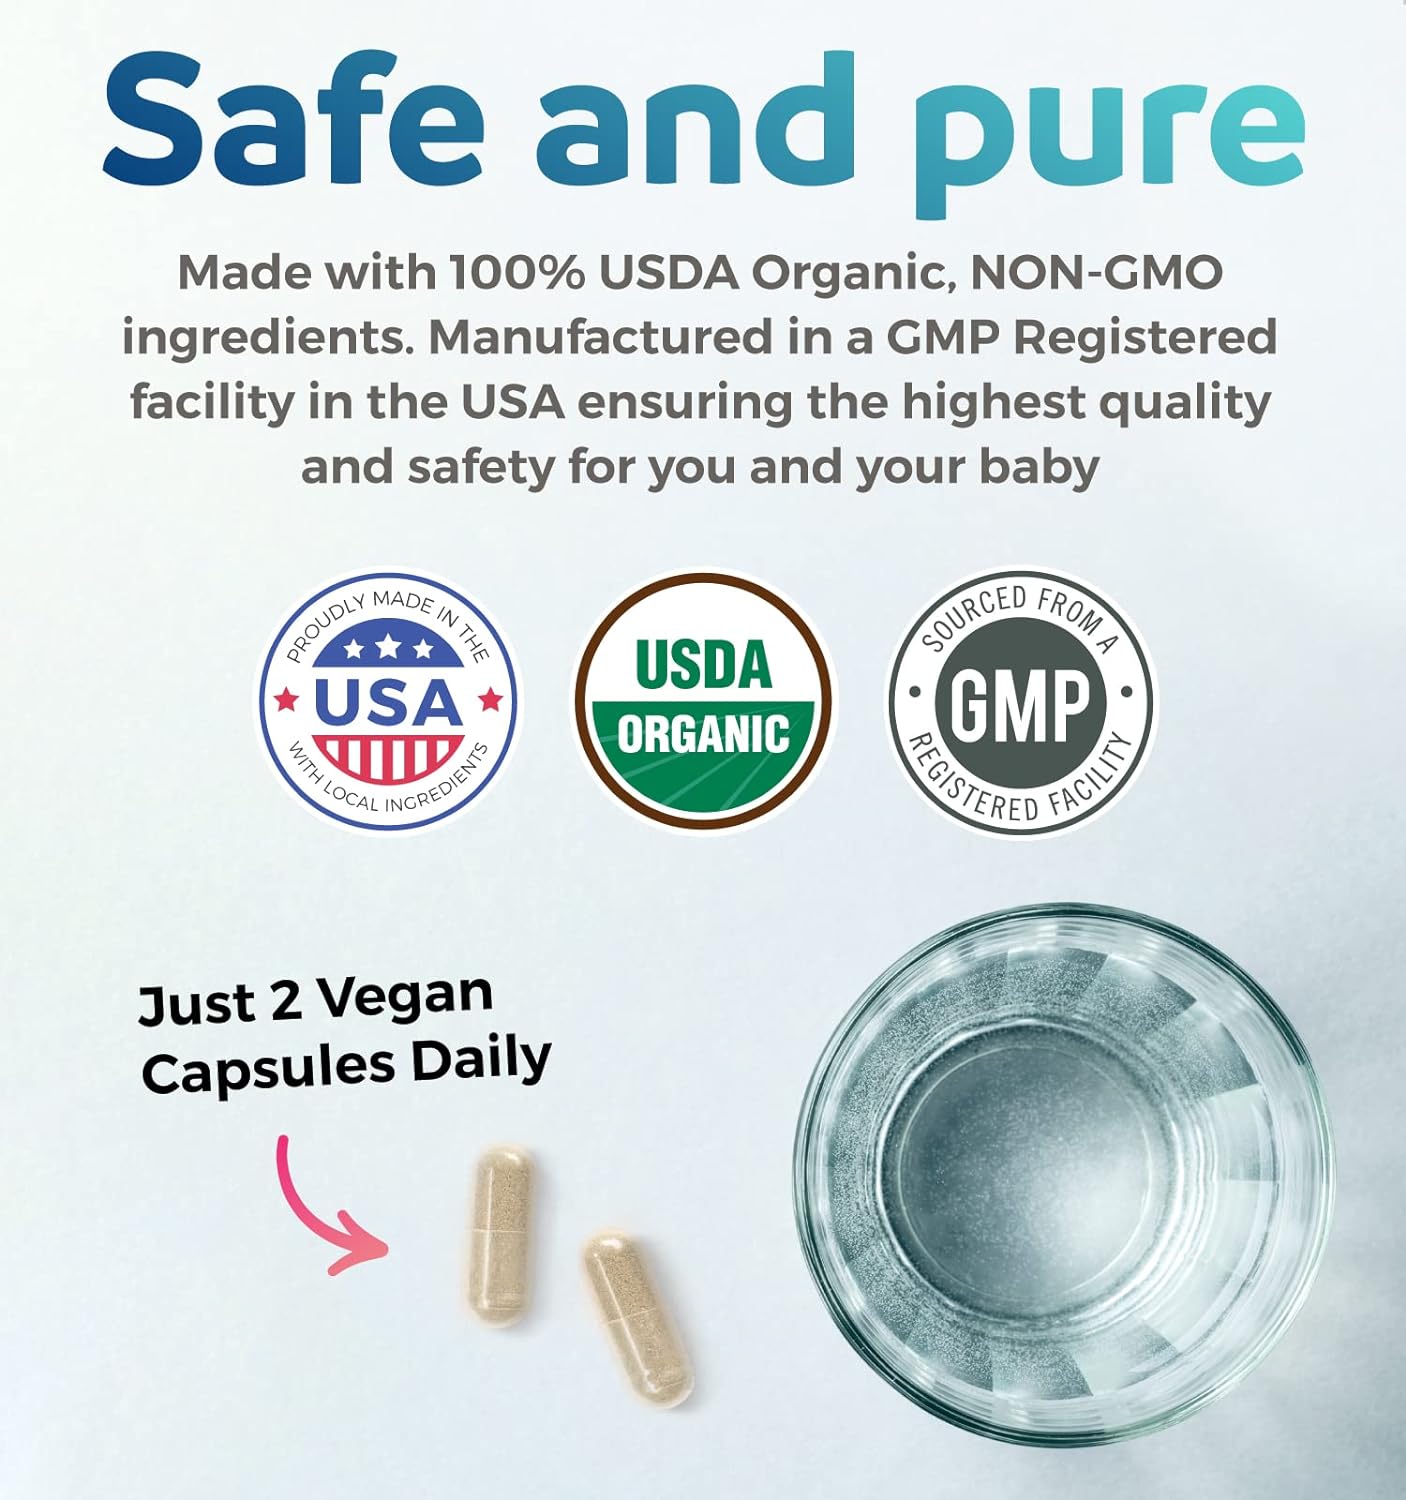 USDA Organic Lactation Supplement | Breastfeeding Support